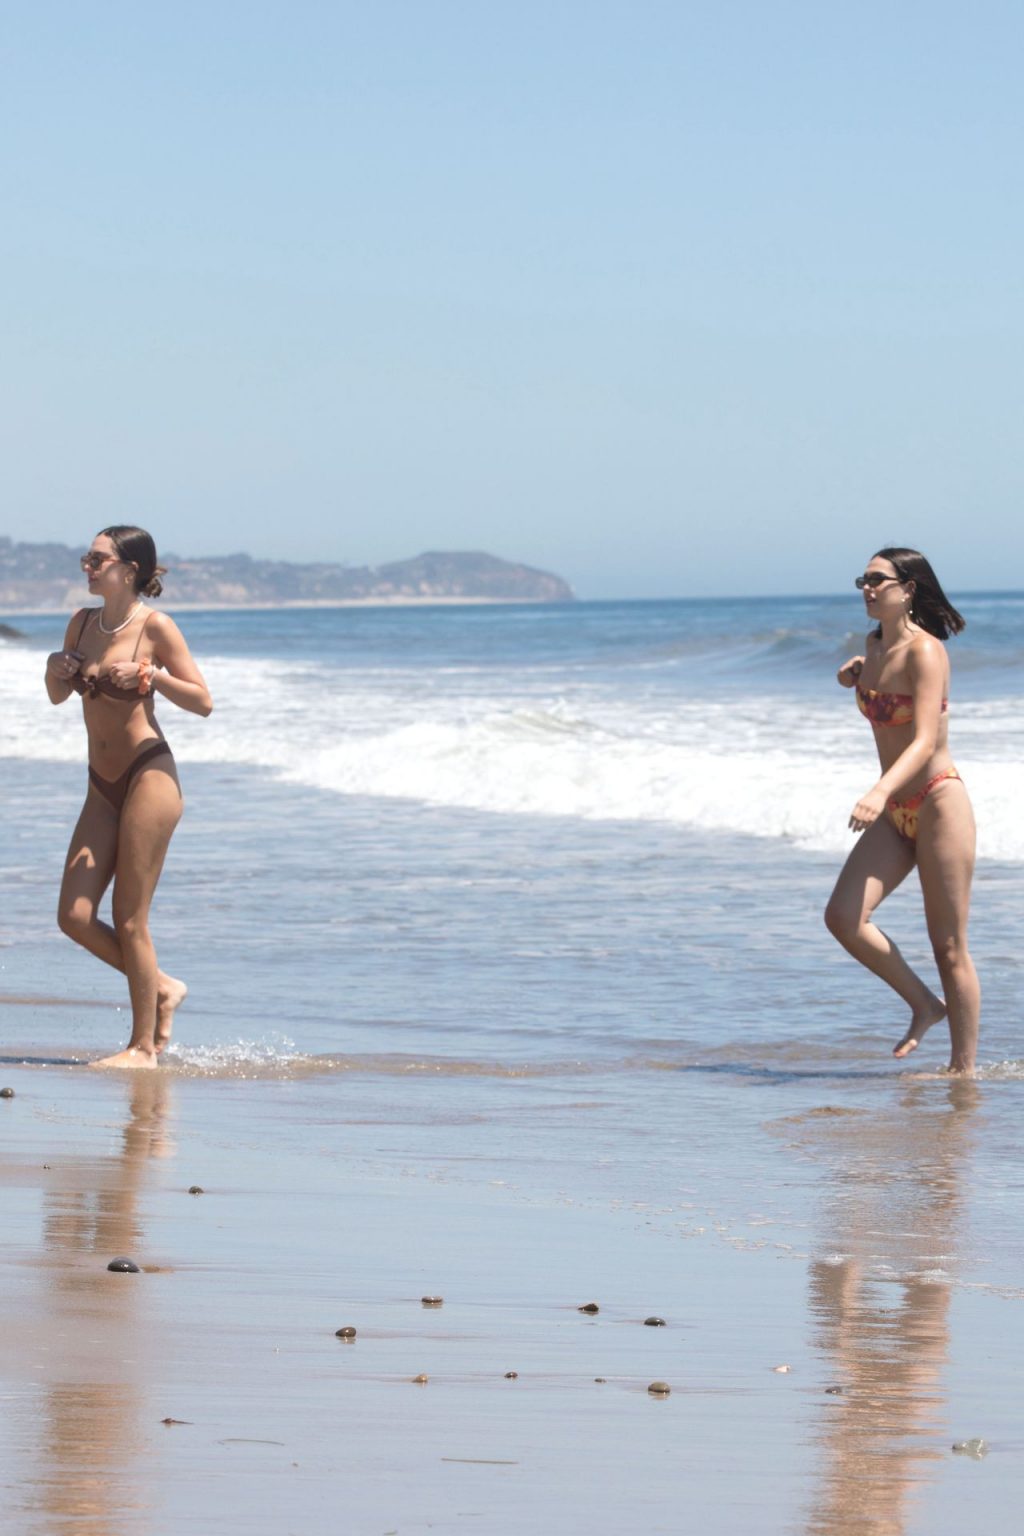 Delilah Belle Hamlin &amp; Amelia Hamlin Show Off Their Bikini Bodies in Malibu (44 Photos)